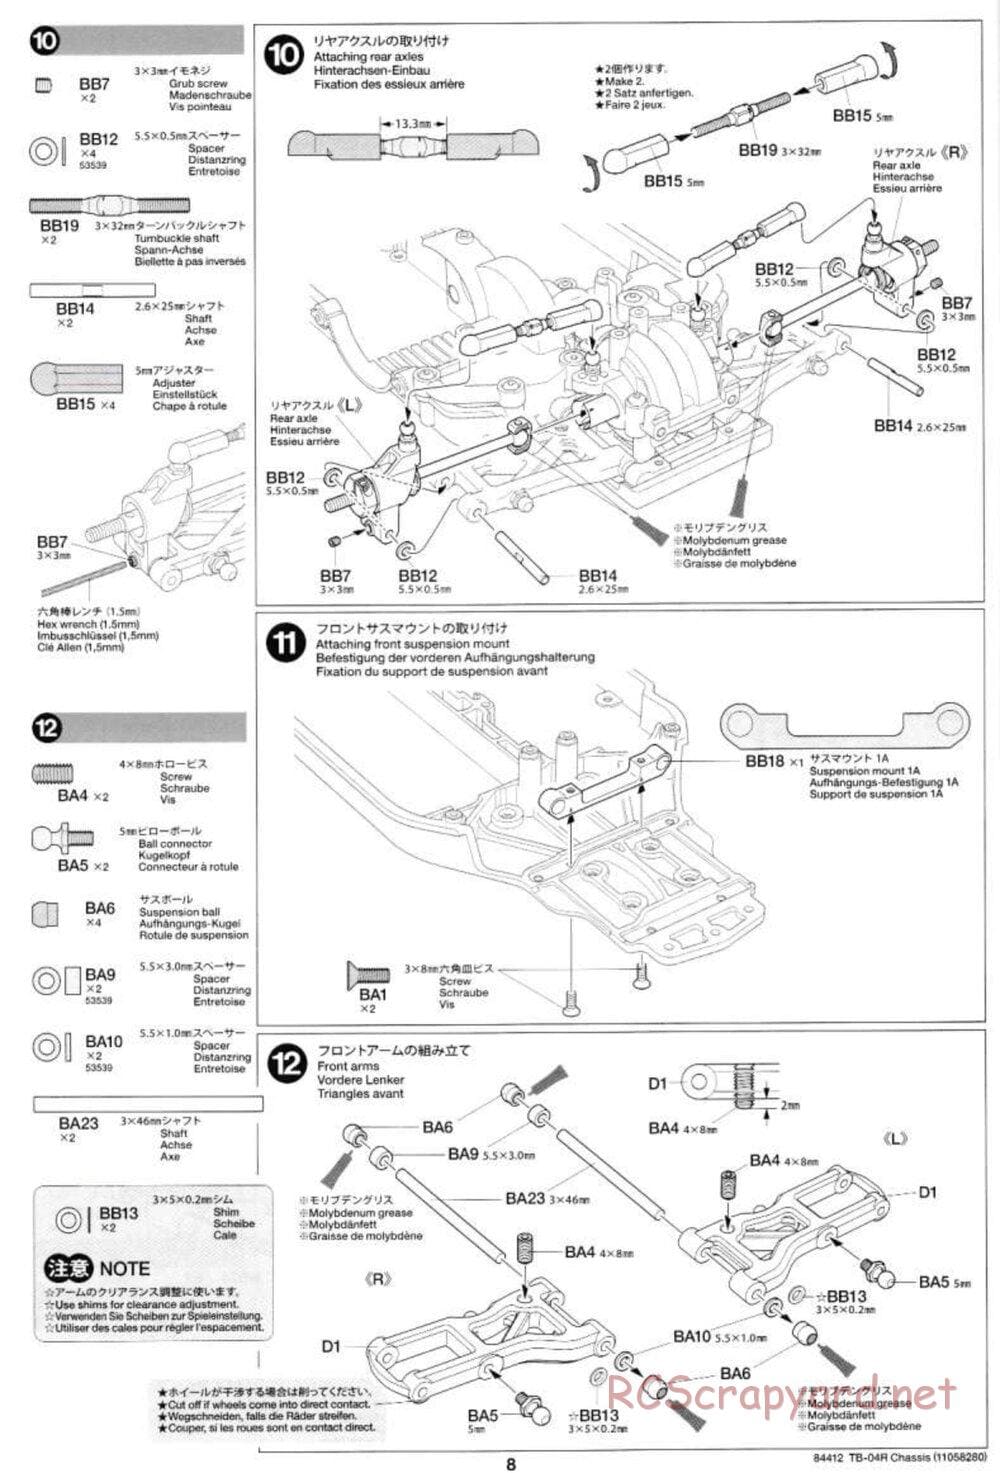 Tamiya - TB-04R Chassis Chassis - Manual - Page 8